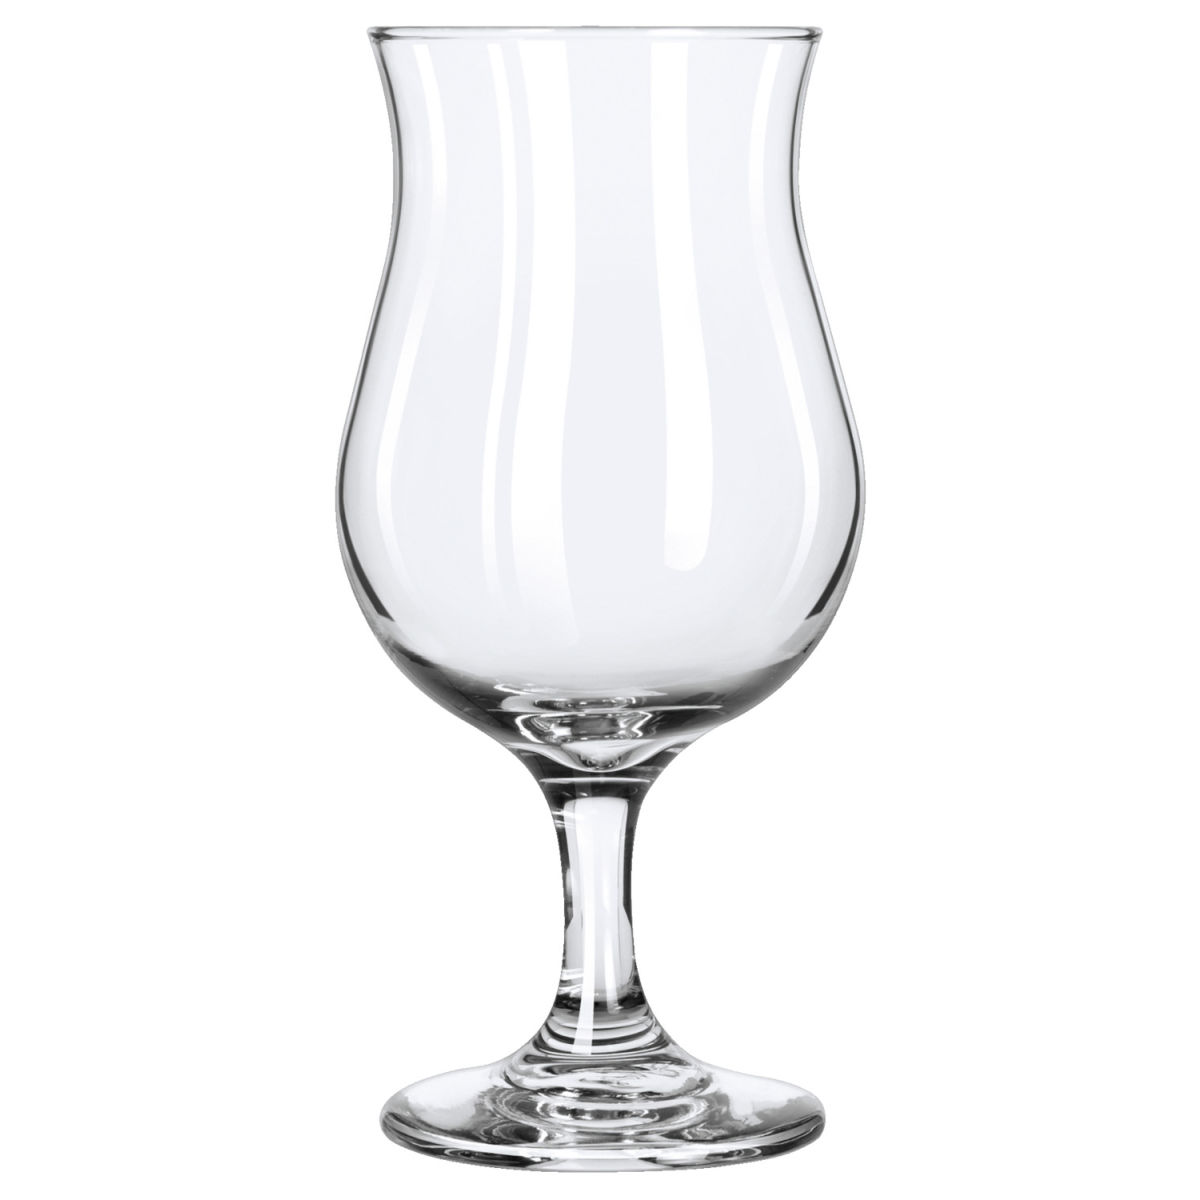 Royal leerdam Cocktailglas Exotic; 390ml, 7x17.5 cm (ØxH); transparant; 12 stuk / verpakking